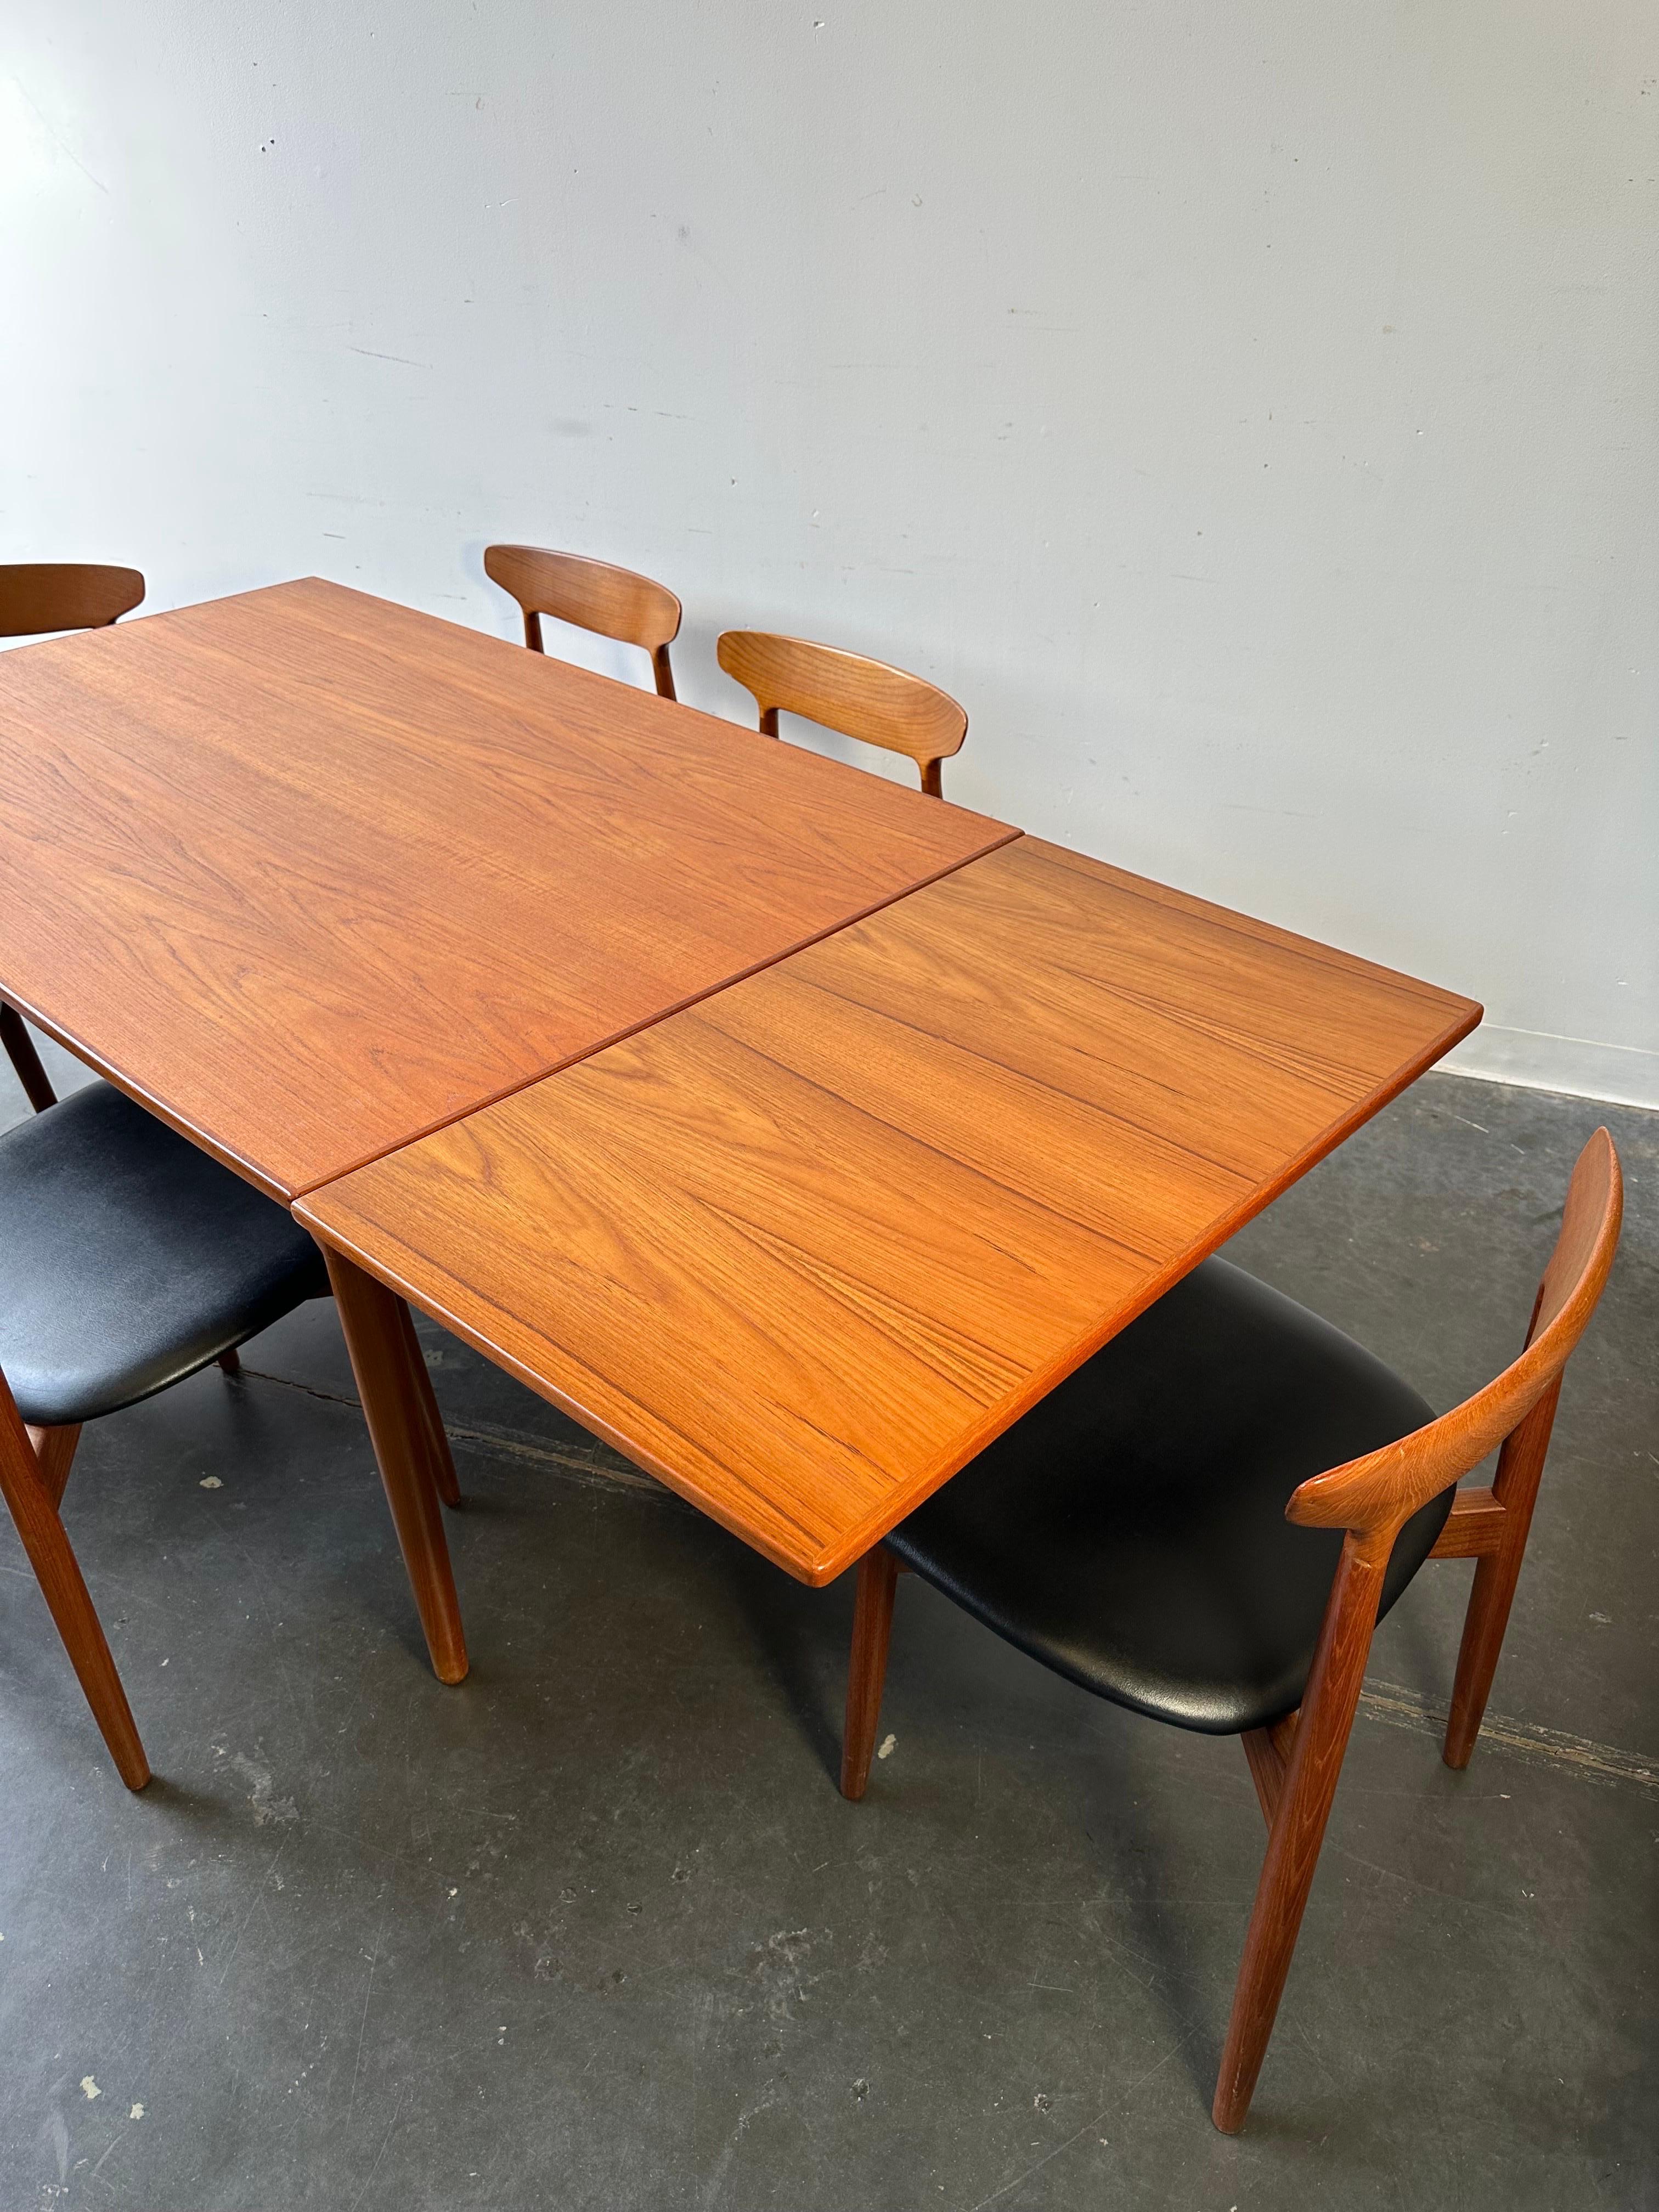 Scandinavian Modern Danish Teak Dining Table and Chairs by Harry Ostergaard for Randers Mobelfabrik